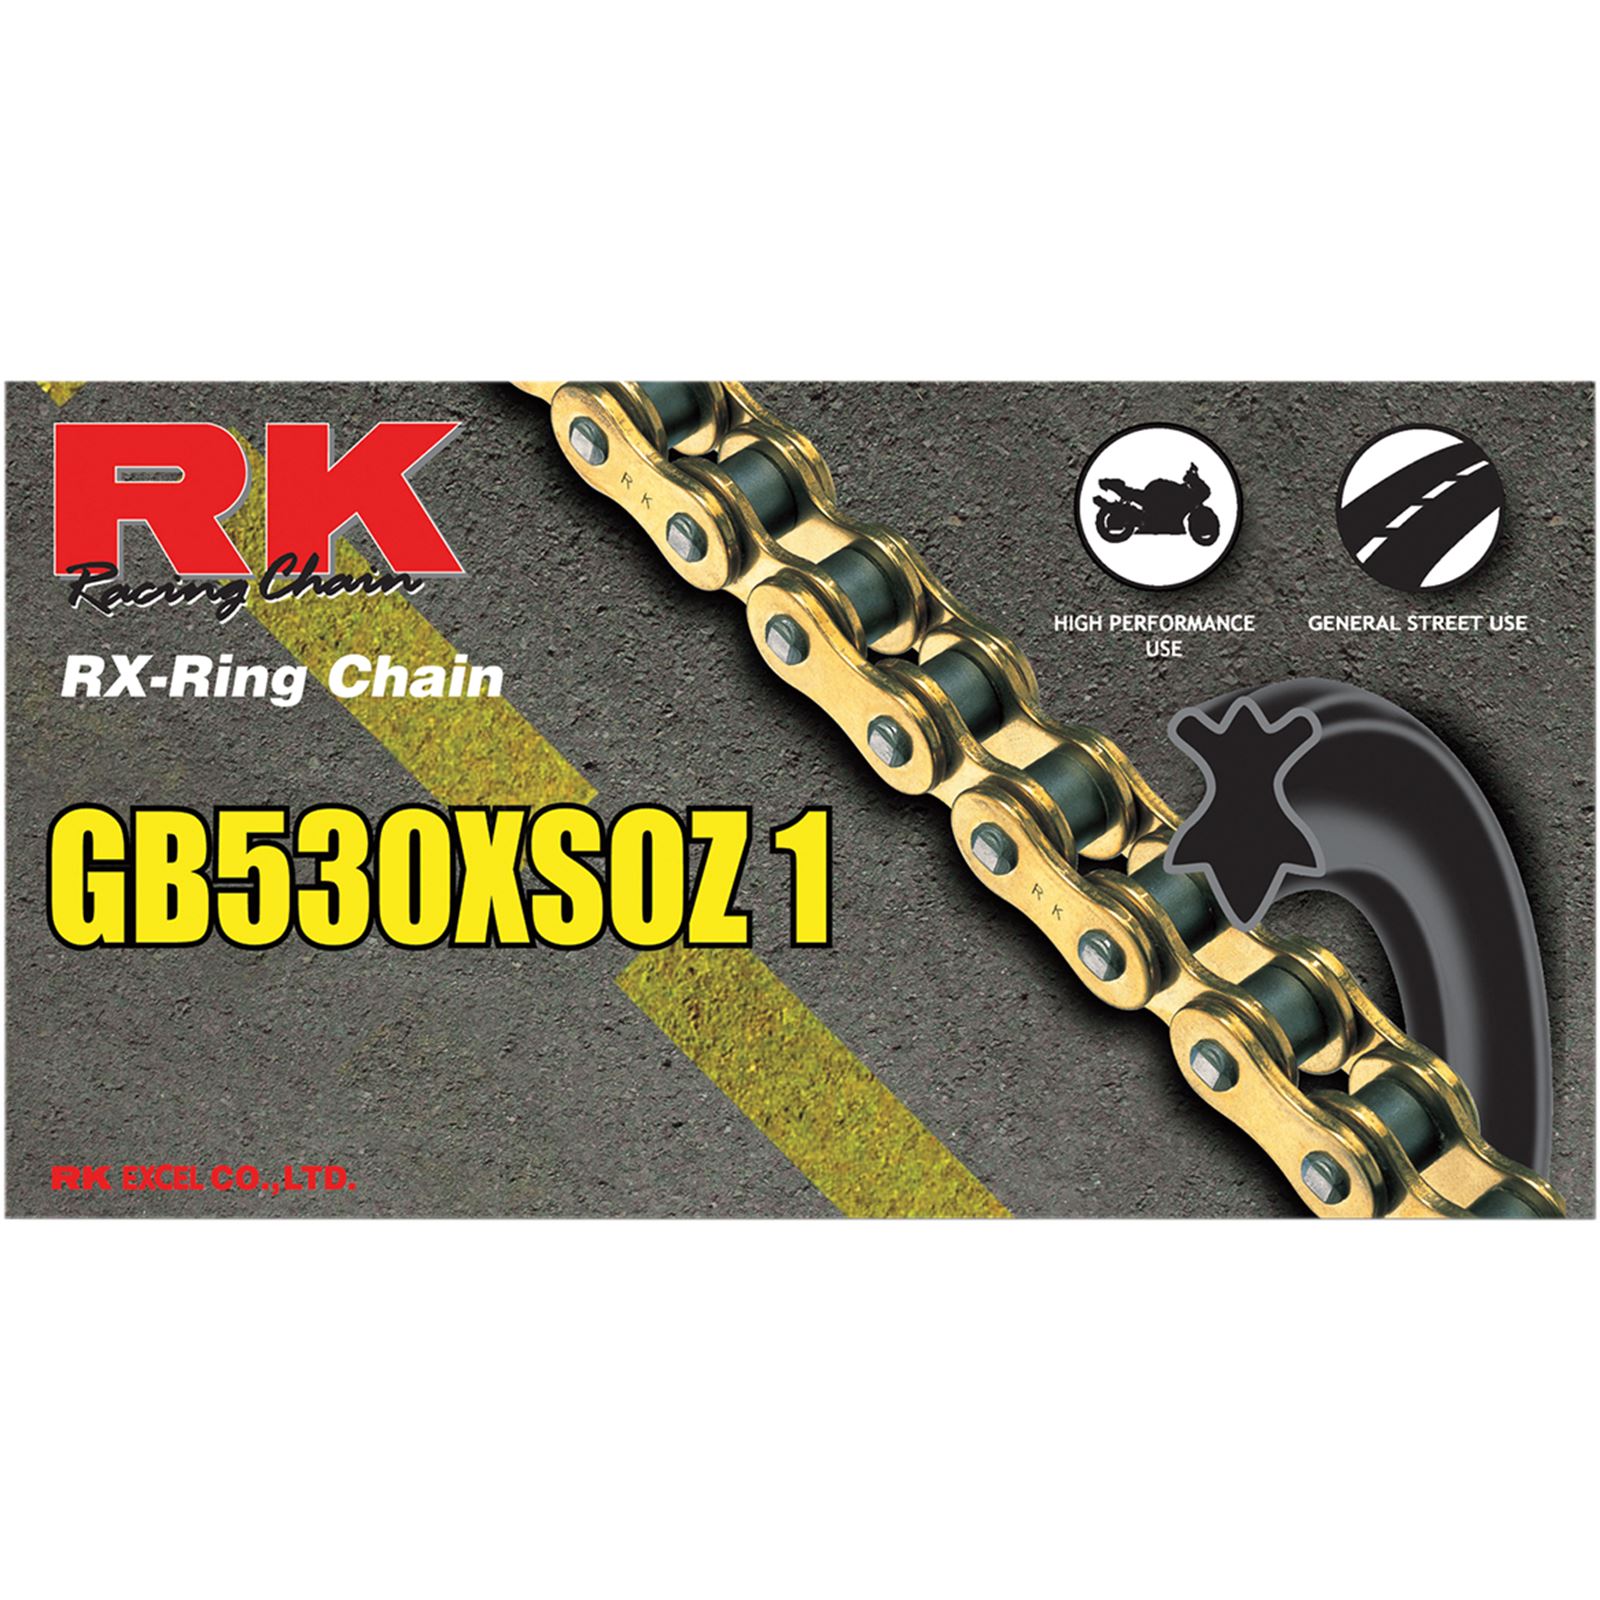 RK Excel 530 XSOZ1 - Chain - 116 Links